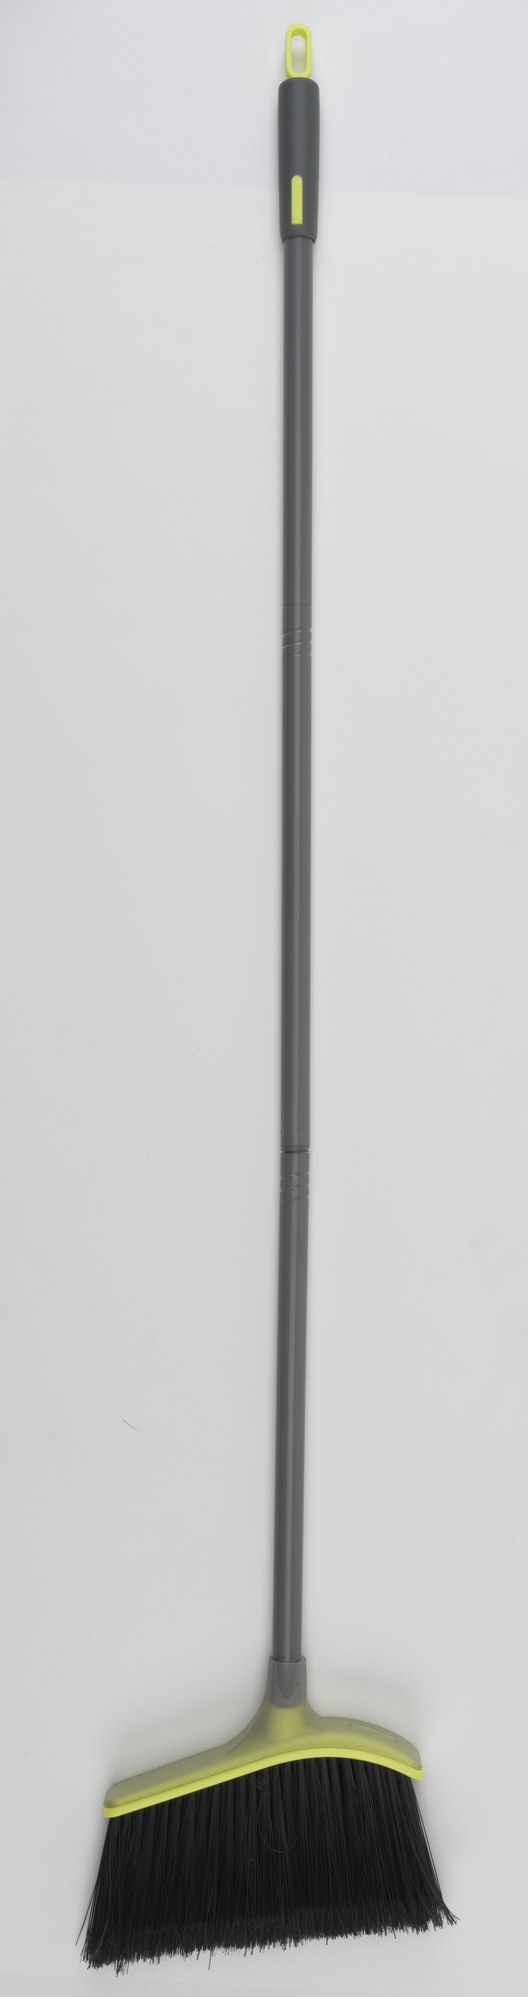 Casabella Wayclean Wide Angle Broom, Gray - image 1 of 2